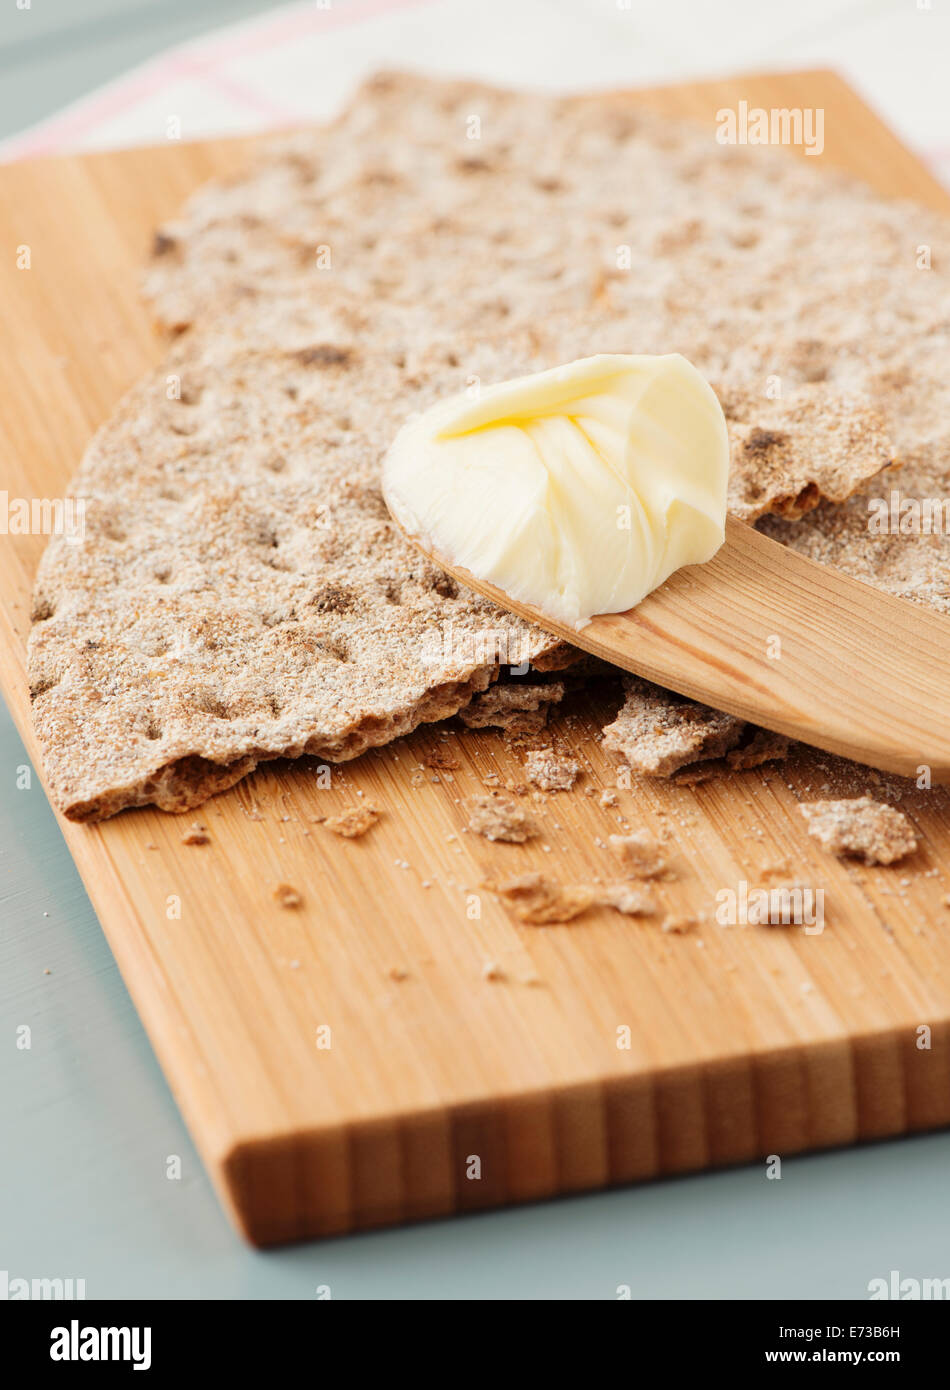 Closeup of swedish crispbread, flat rye bread, on wooden cutting board. Stock Photo